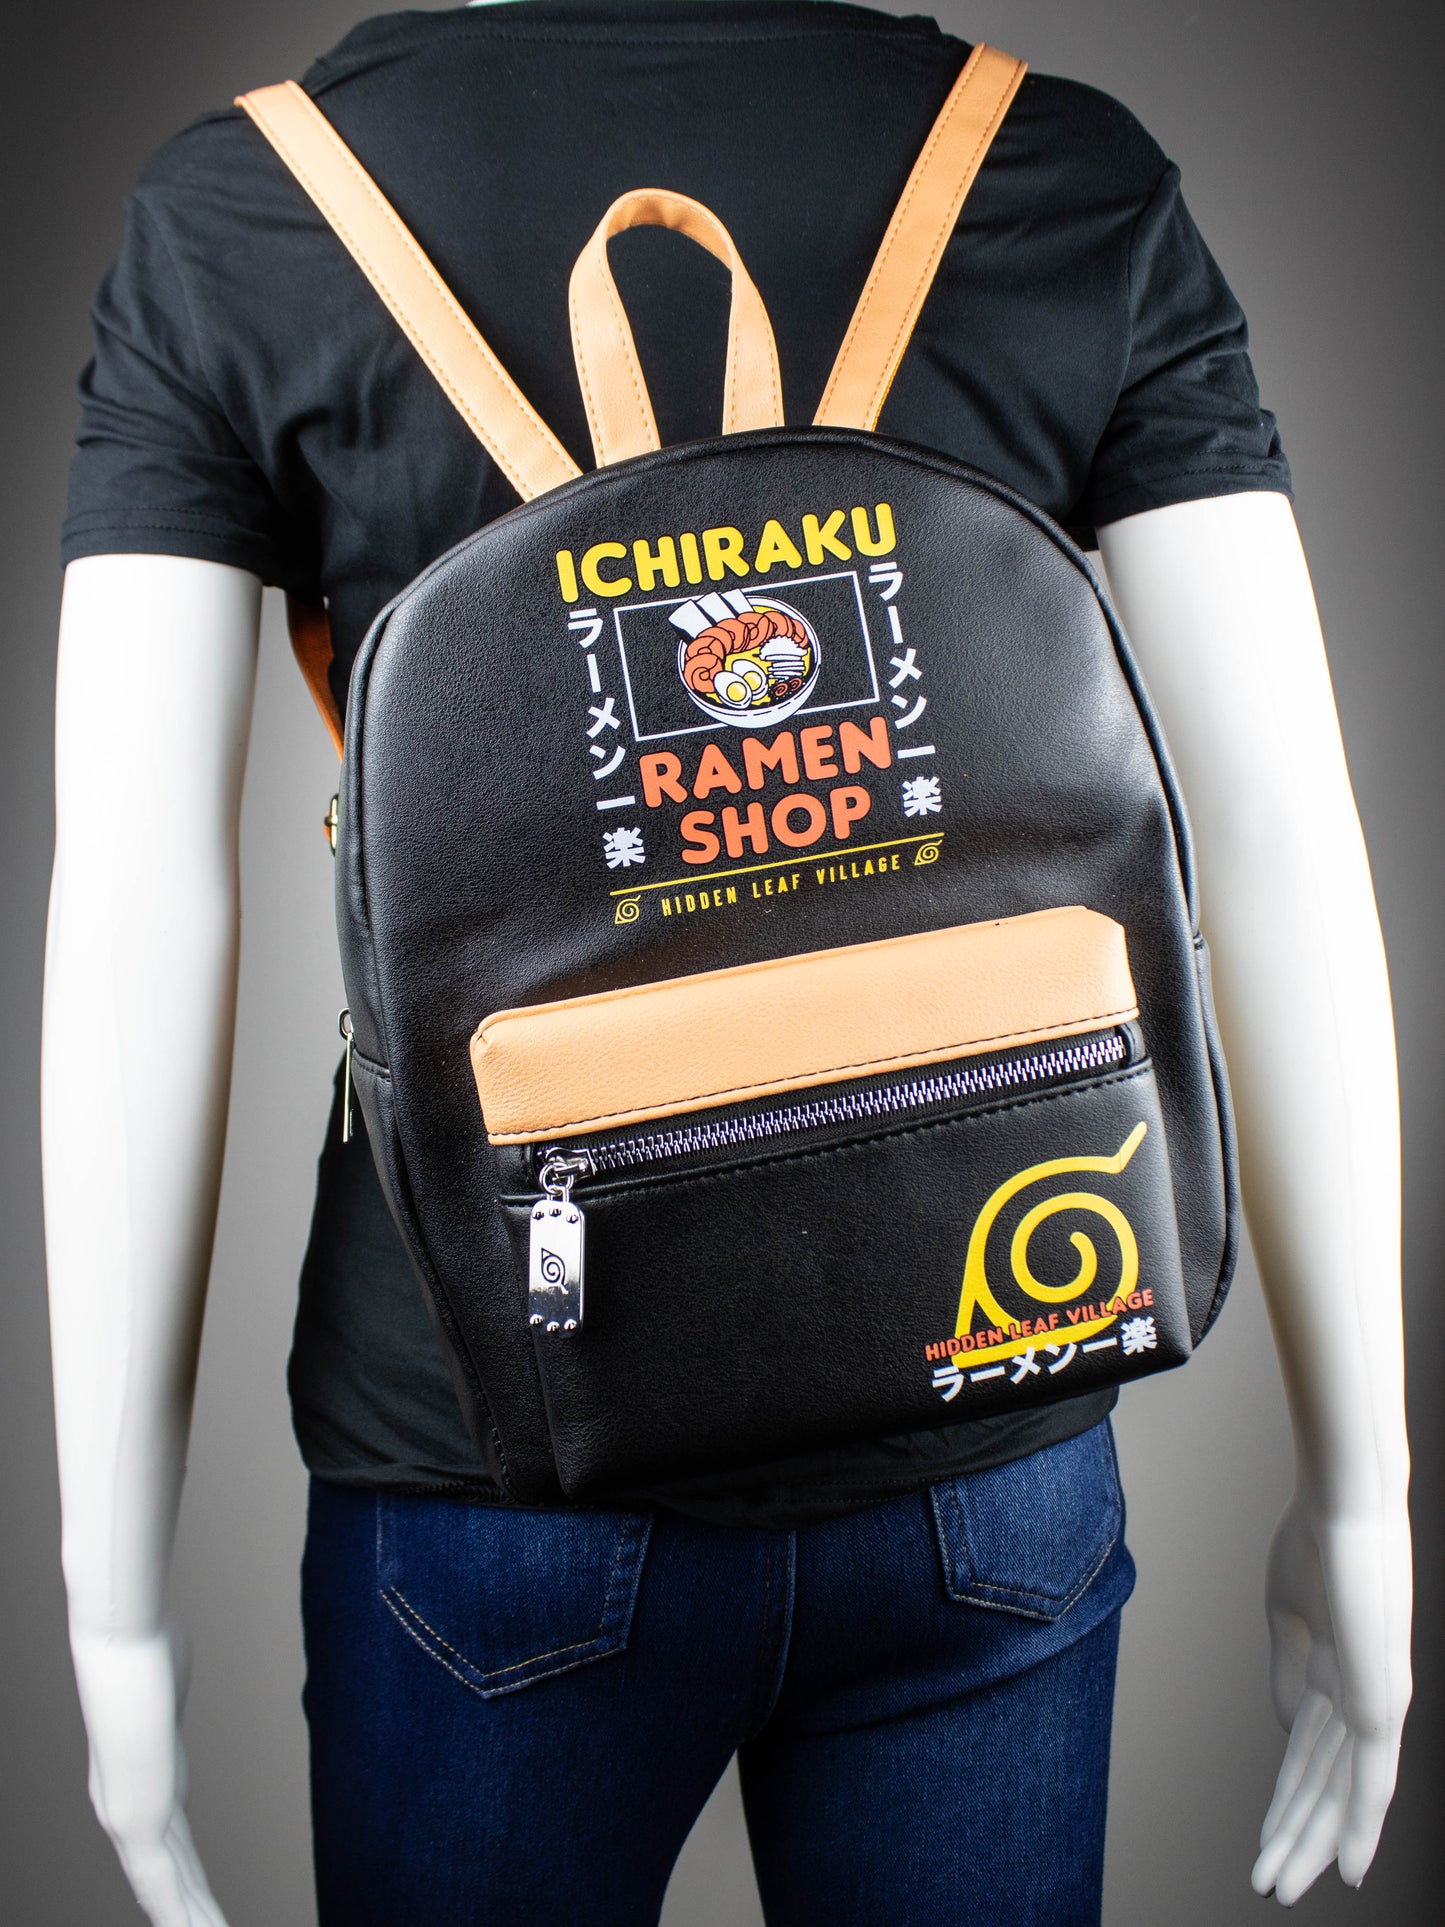 Load image into Gallery viewer, Naruto Ichiraku Ramen Shop Mini BackpackNaruto Ichiraku Ramen Shop Mini Backpack
